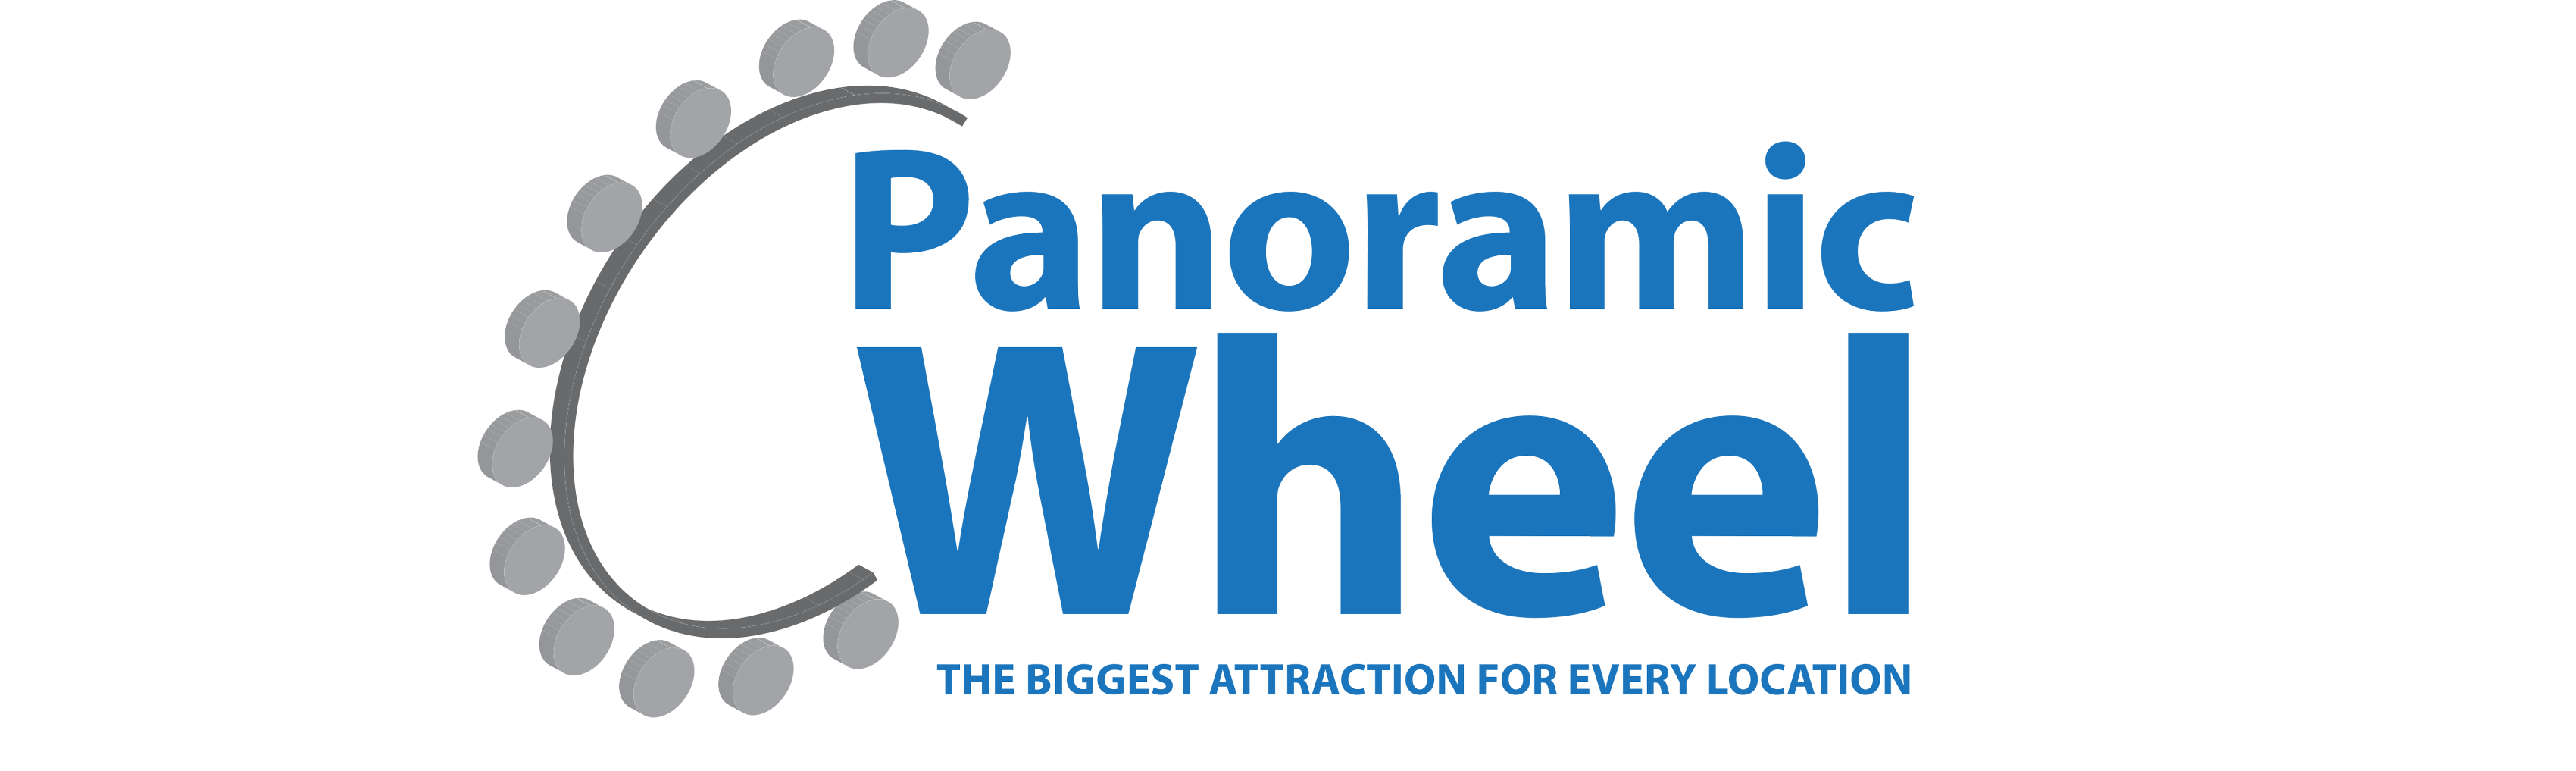 Panoramic Wheel Company